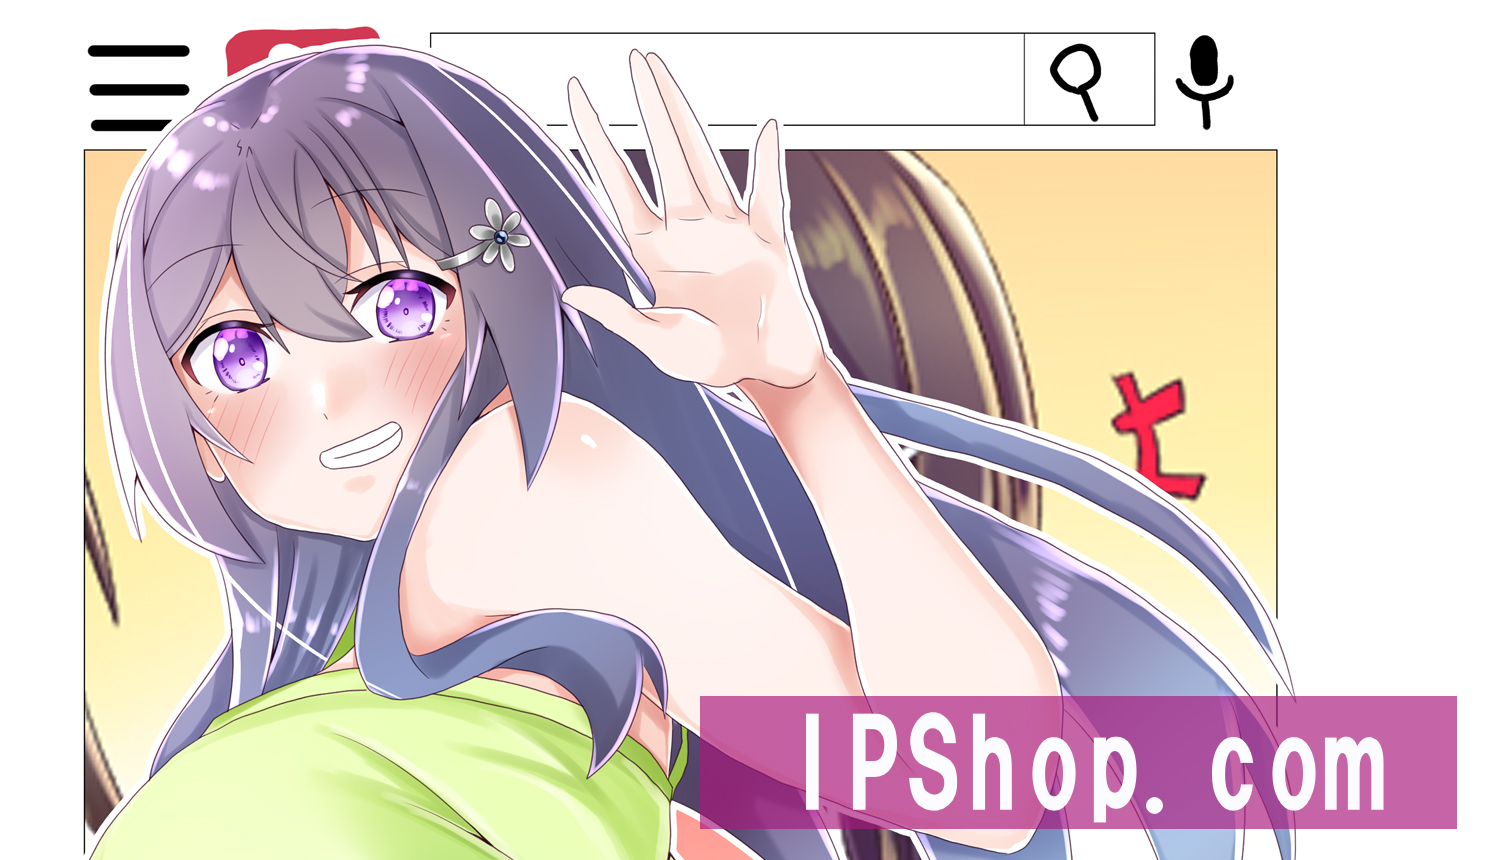 IPShop.com